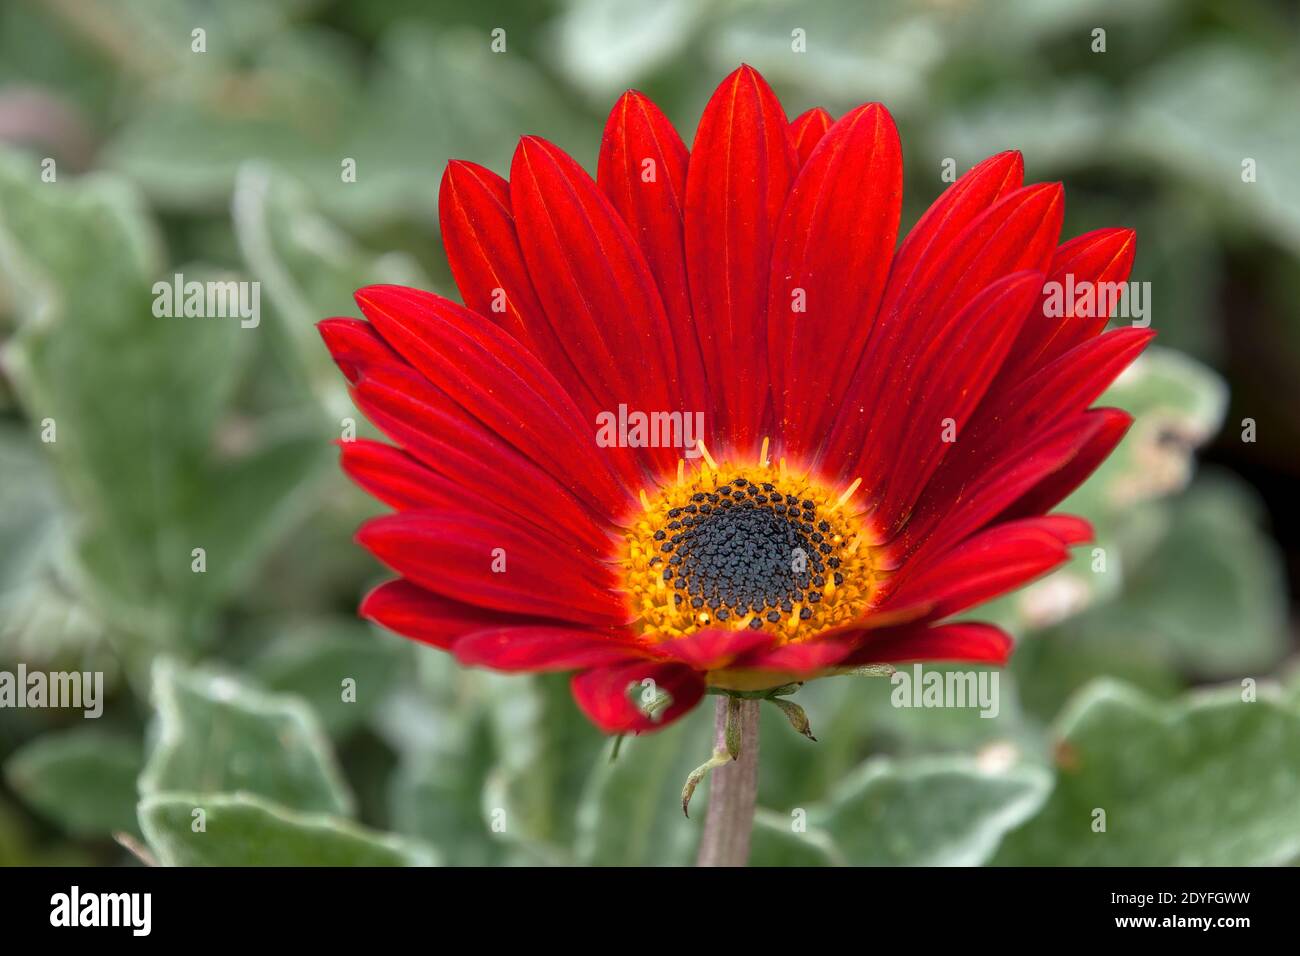 Sydney Australia, vibrant red flower of an arctotis or safari daisy Stock Photo